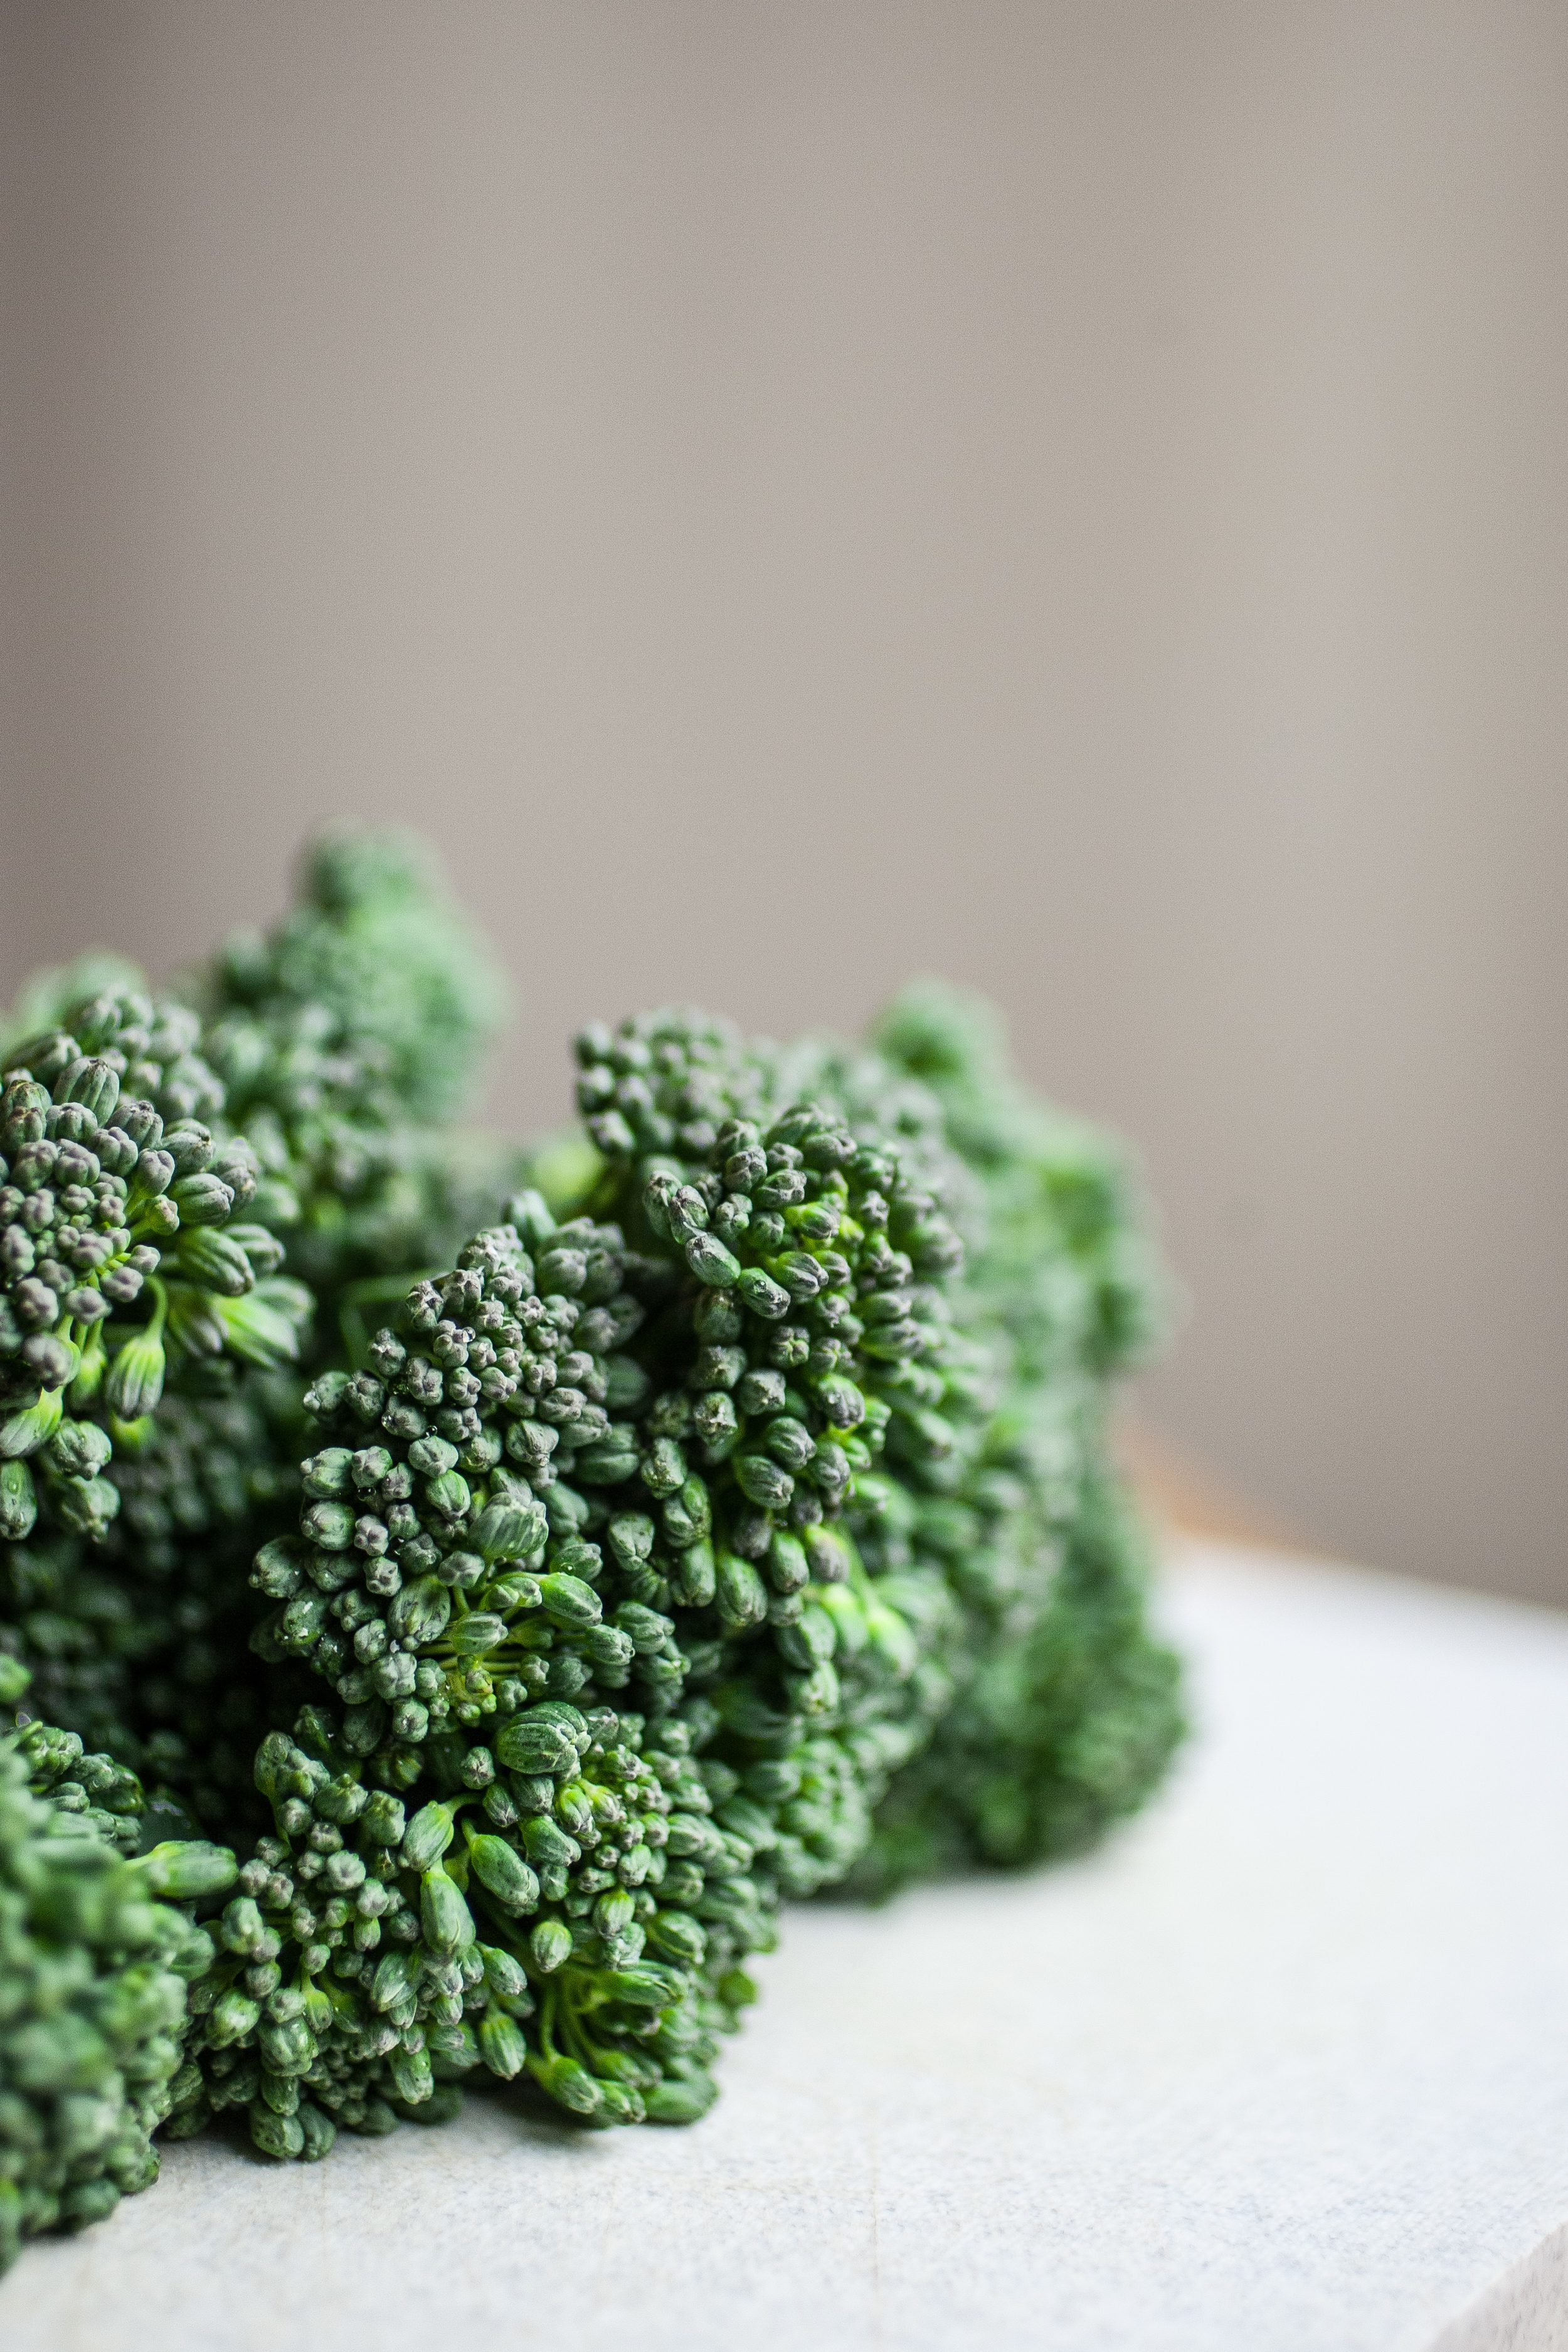 Asian Broccolette Polenta Produce On Parade,Ashley Furniture Reviews